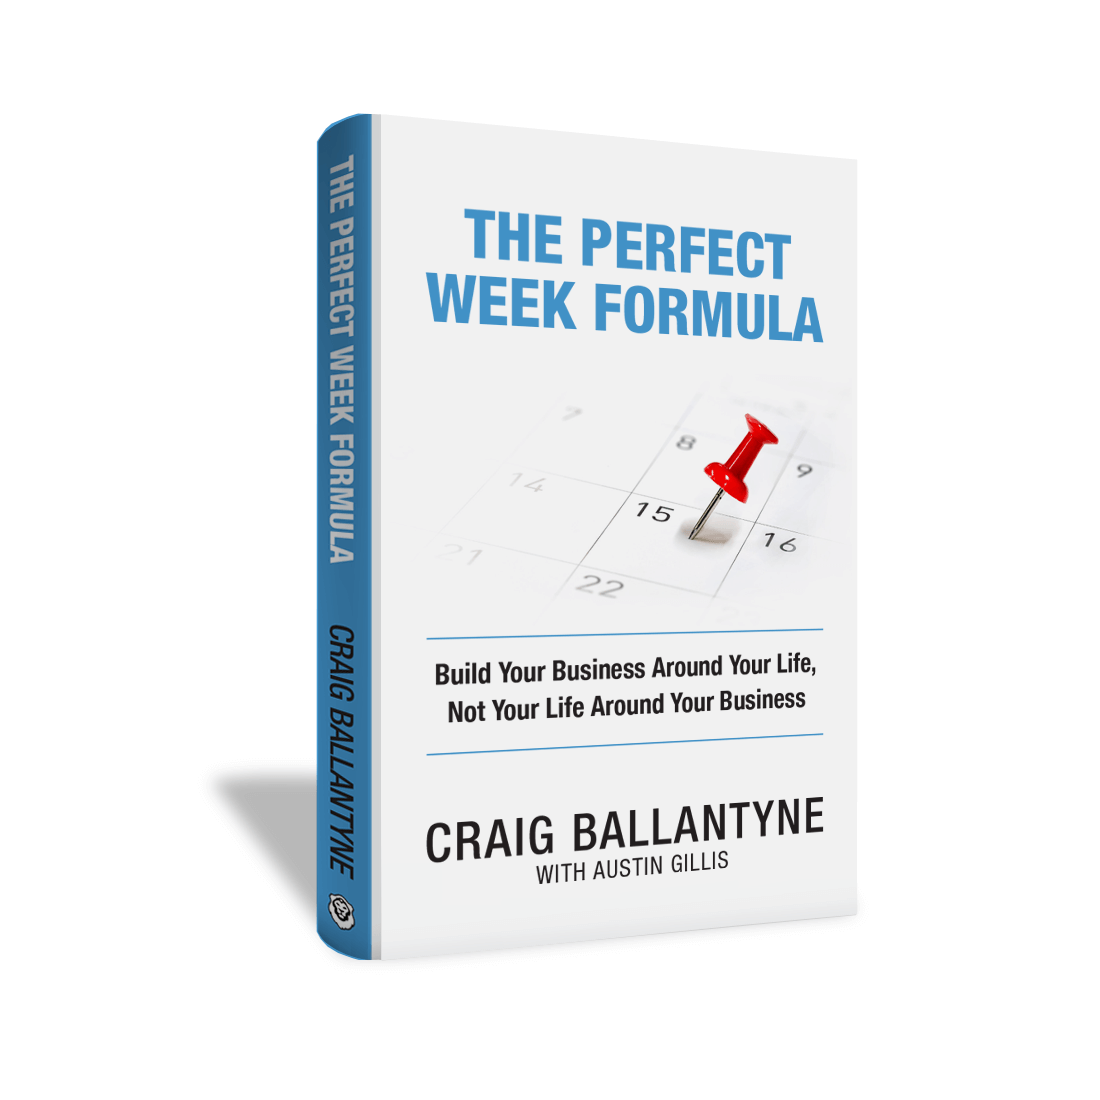 The Perfect Week Formula by Craig Ballantyne